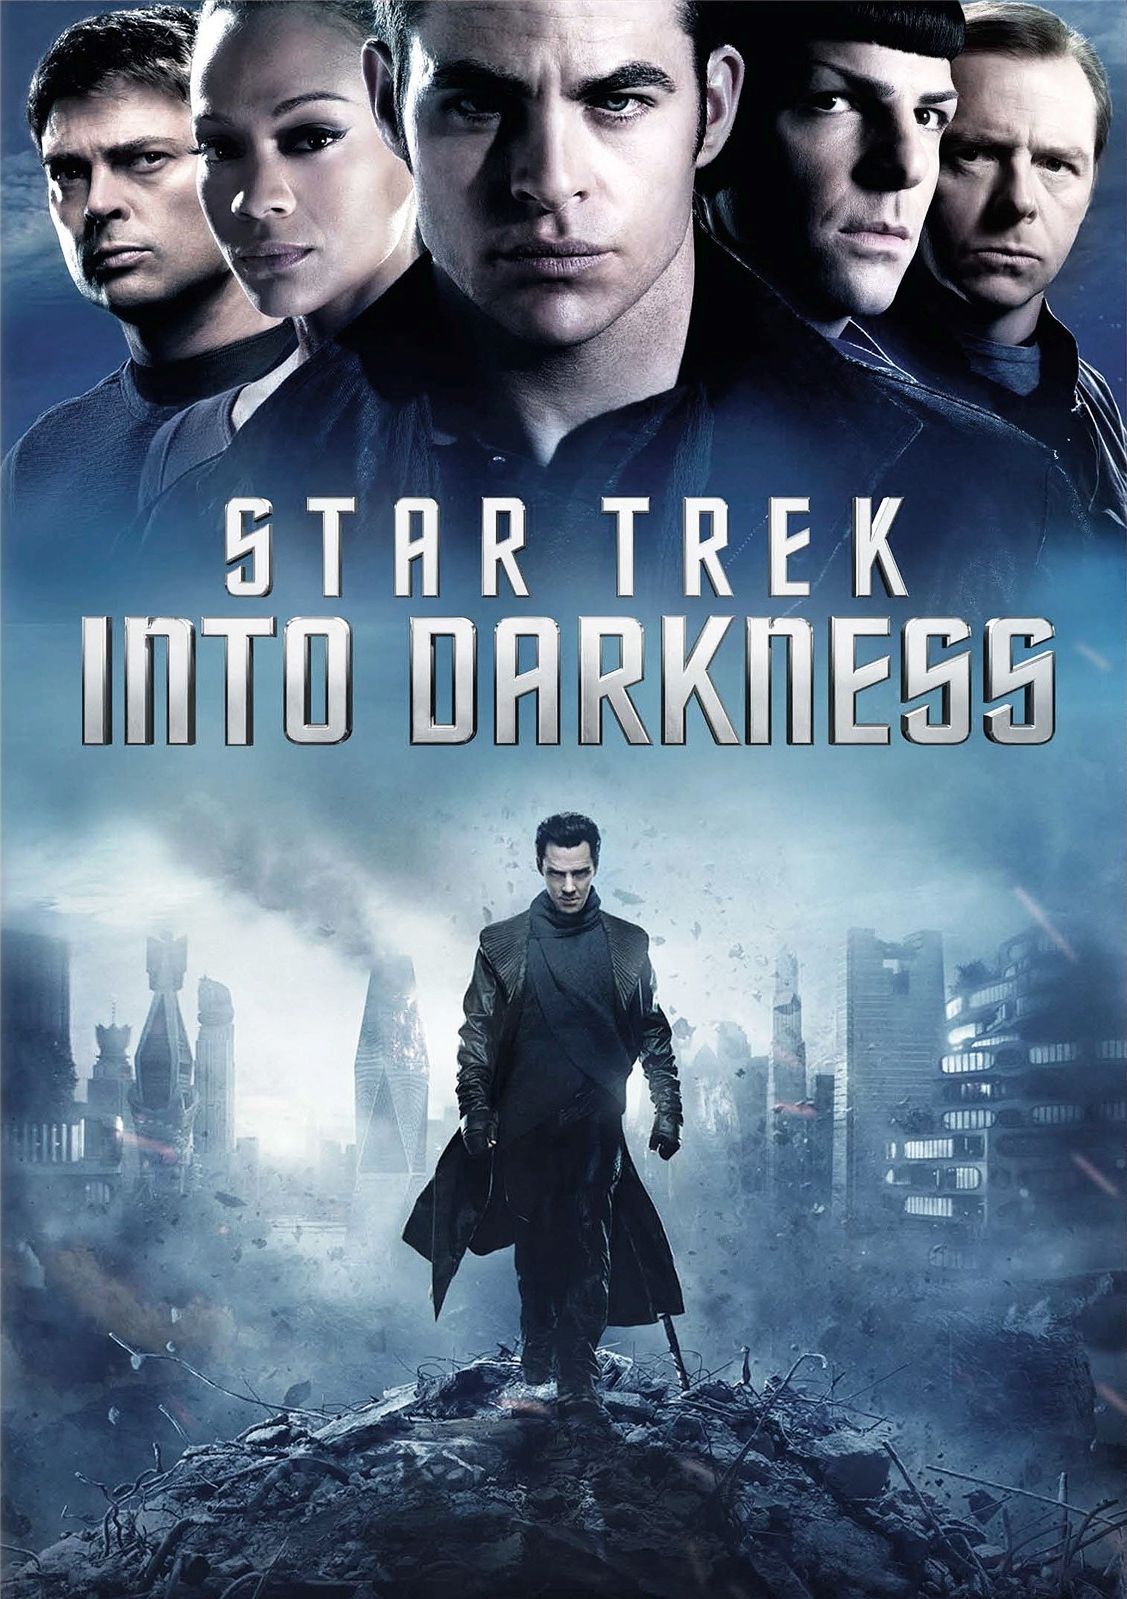 Star Trek Into Darkness Review. Star trek into darkness, Watch star trek, Star trek movies